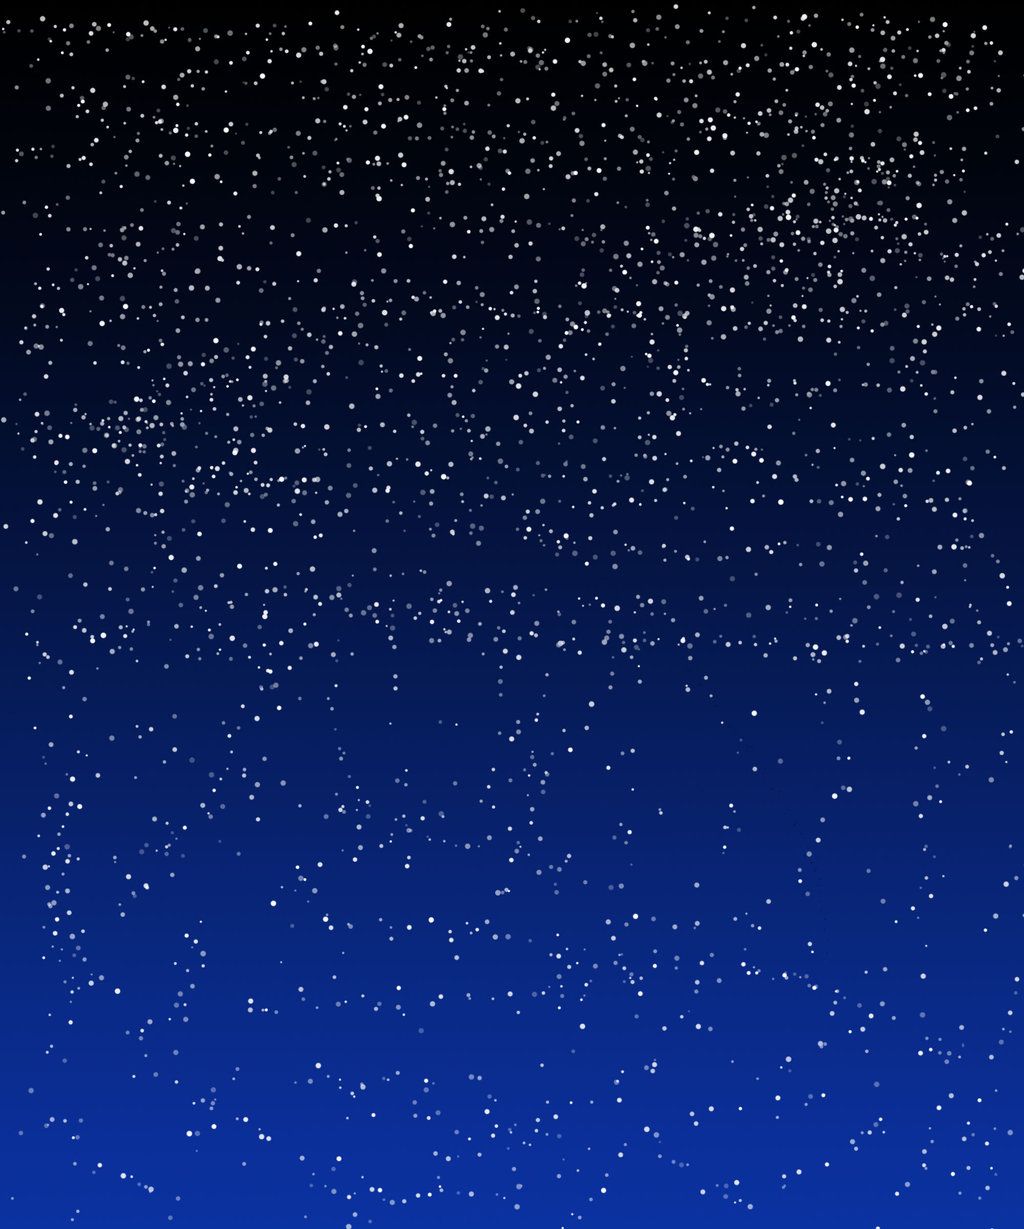 Star Night Sky background by SusanLucarioFan16 on DeviantArt